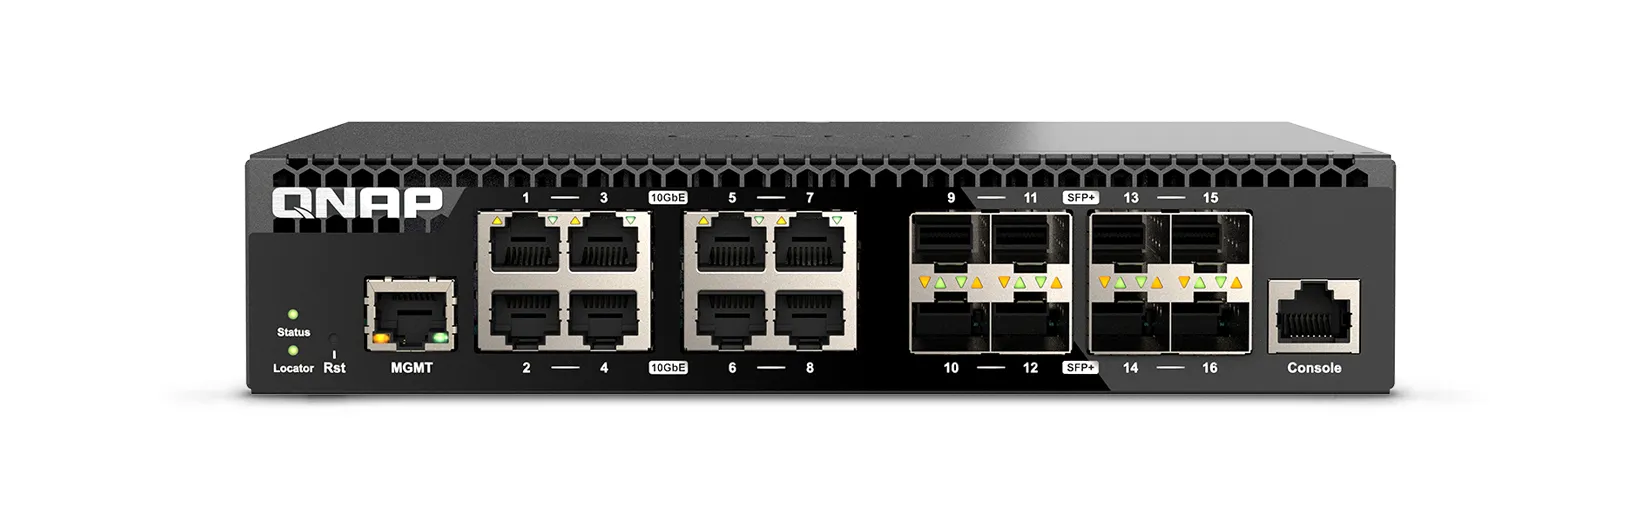 Revendeur officiel Switchs et Hubs QNAP QSW-M3216R-8S8T Managed Switch 16 port of 10GbE